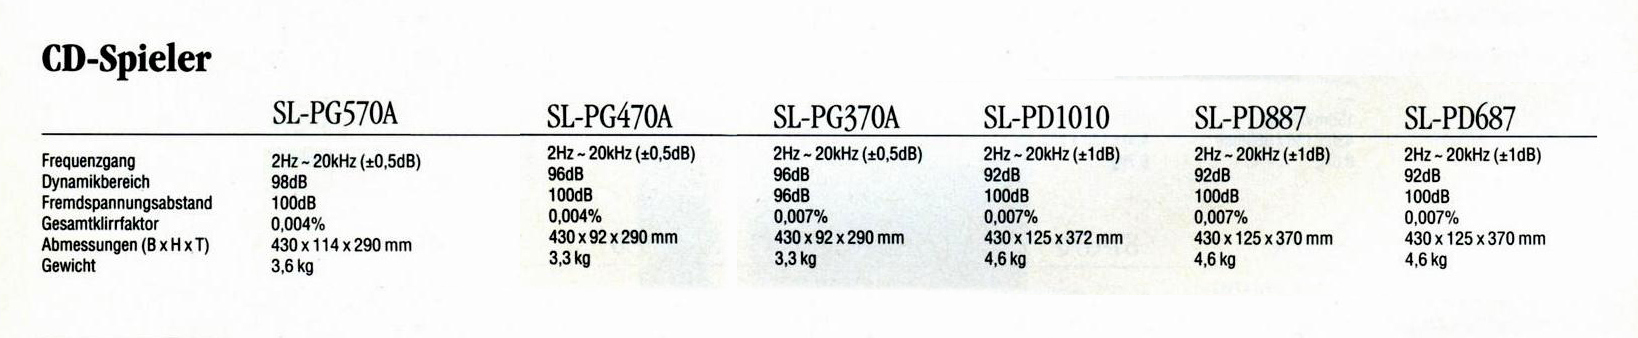 Technics SL-PG- Daten-1995.jpg